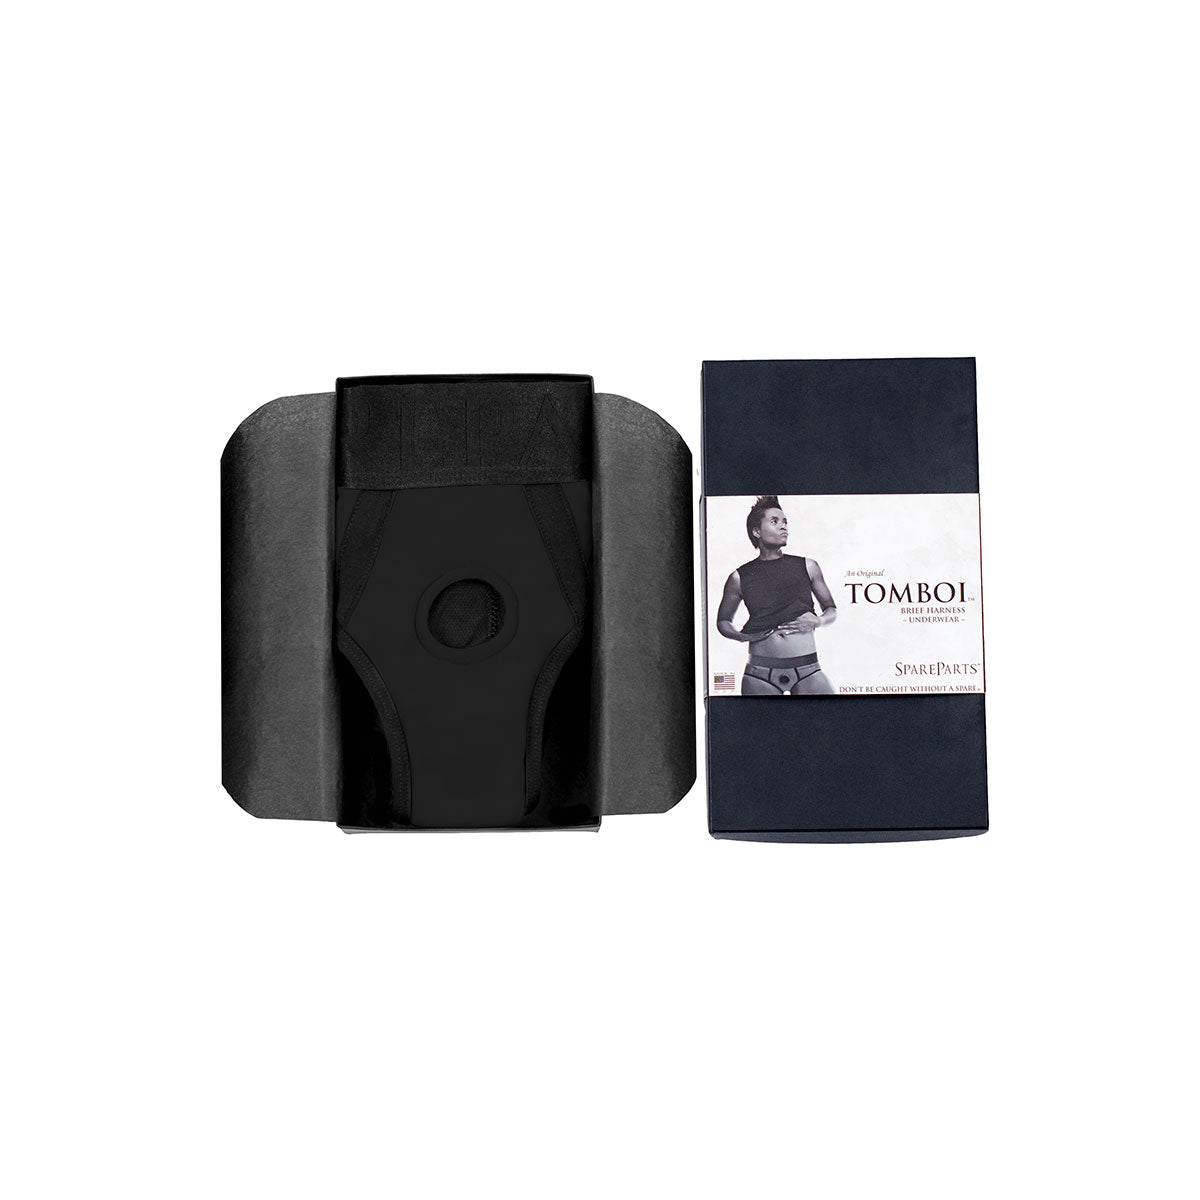 SpareParts Tomboi Harness Black/Black Nylon - 5X